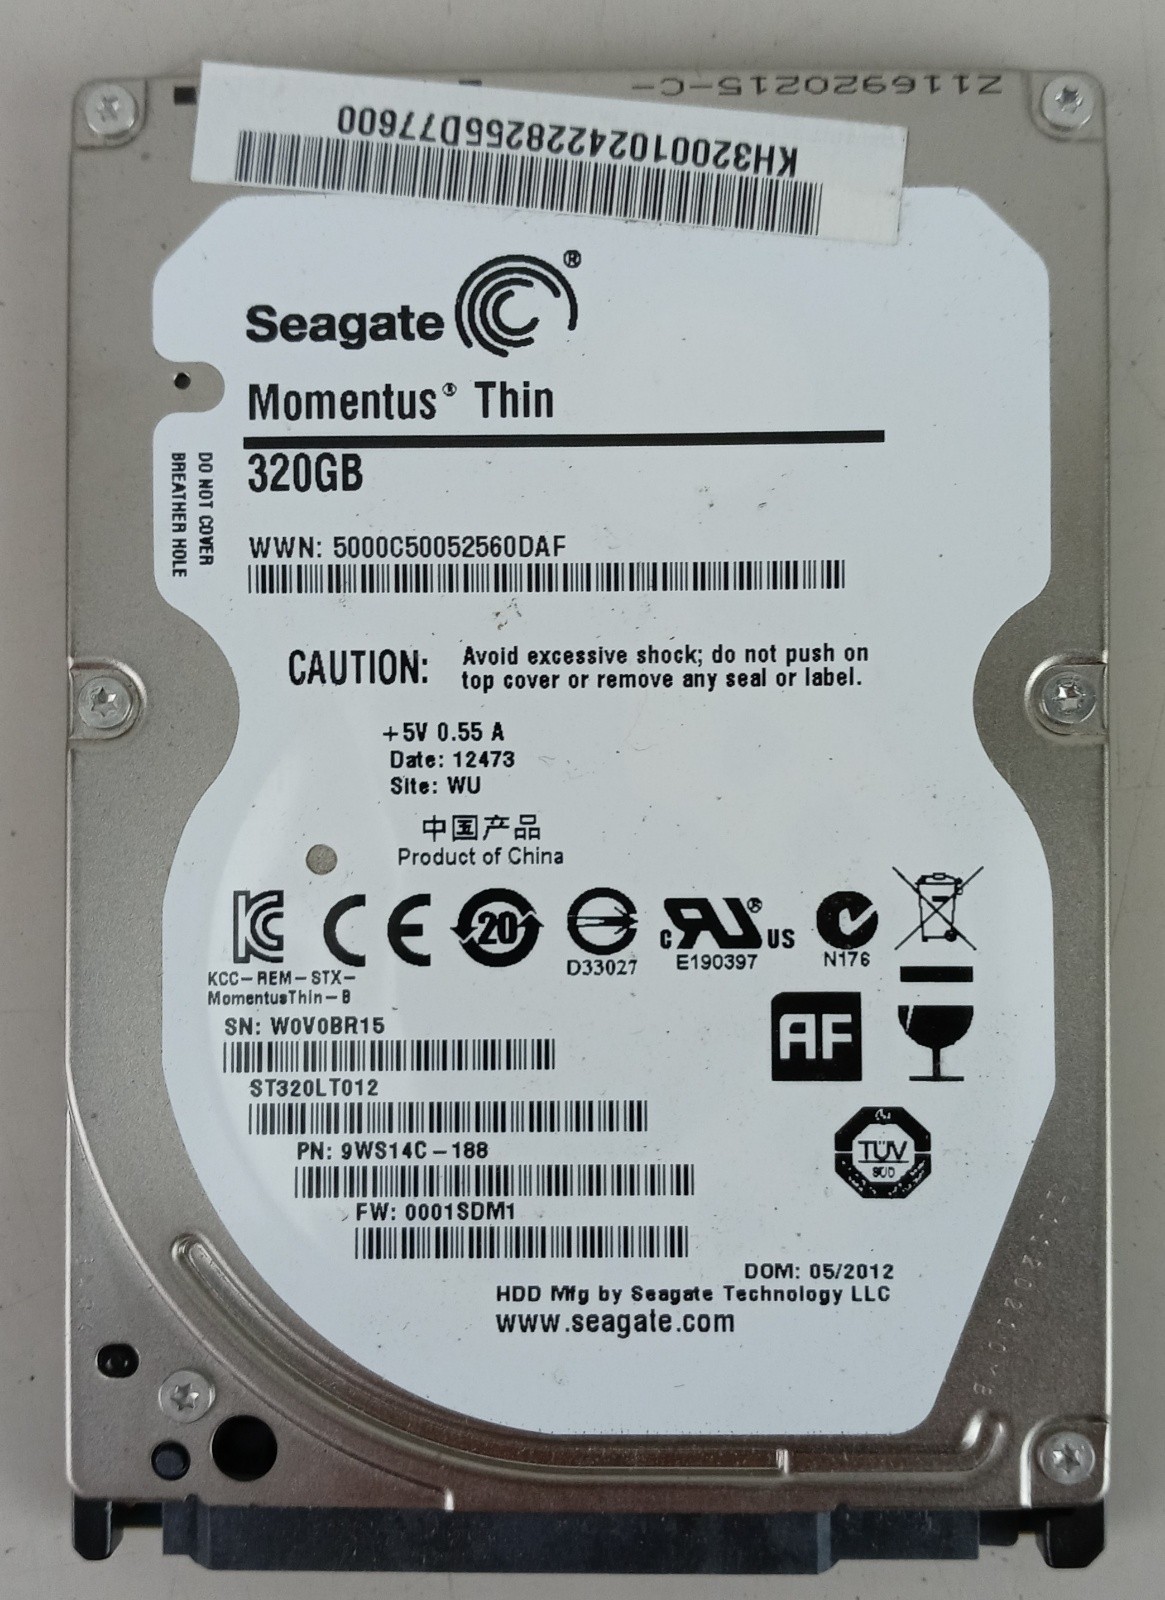 Seagate Momentus Thin 320GB 5400RPM SATA 2.5" Laptop Hard Drive ST320LT012 